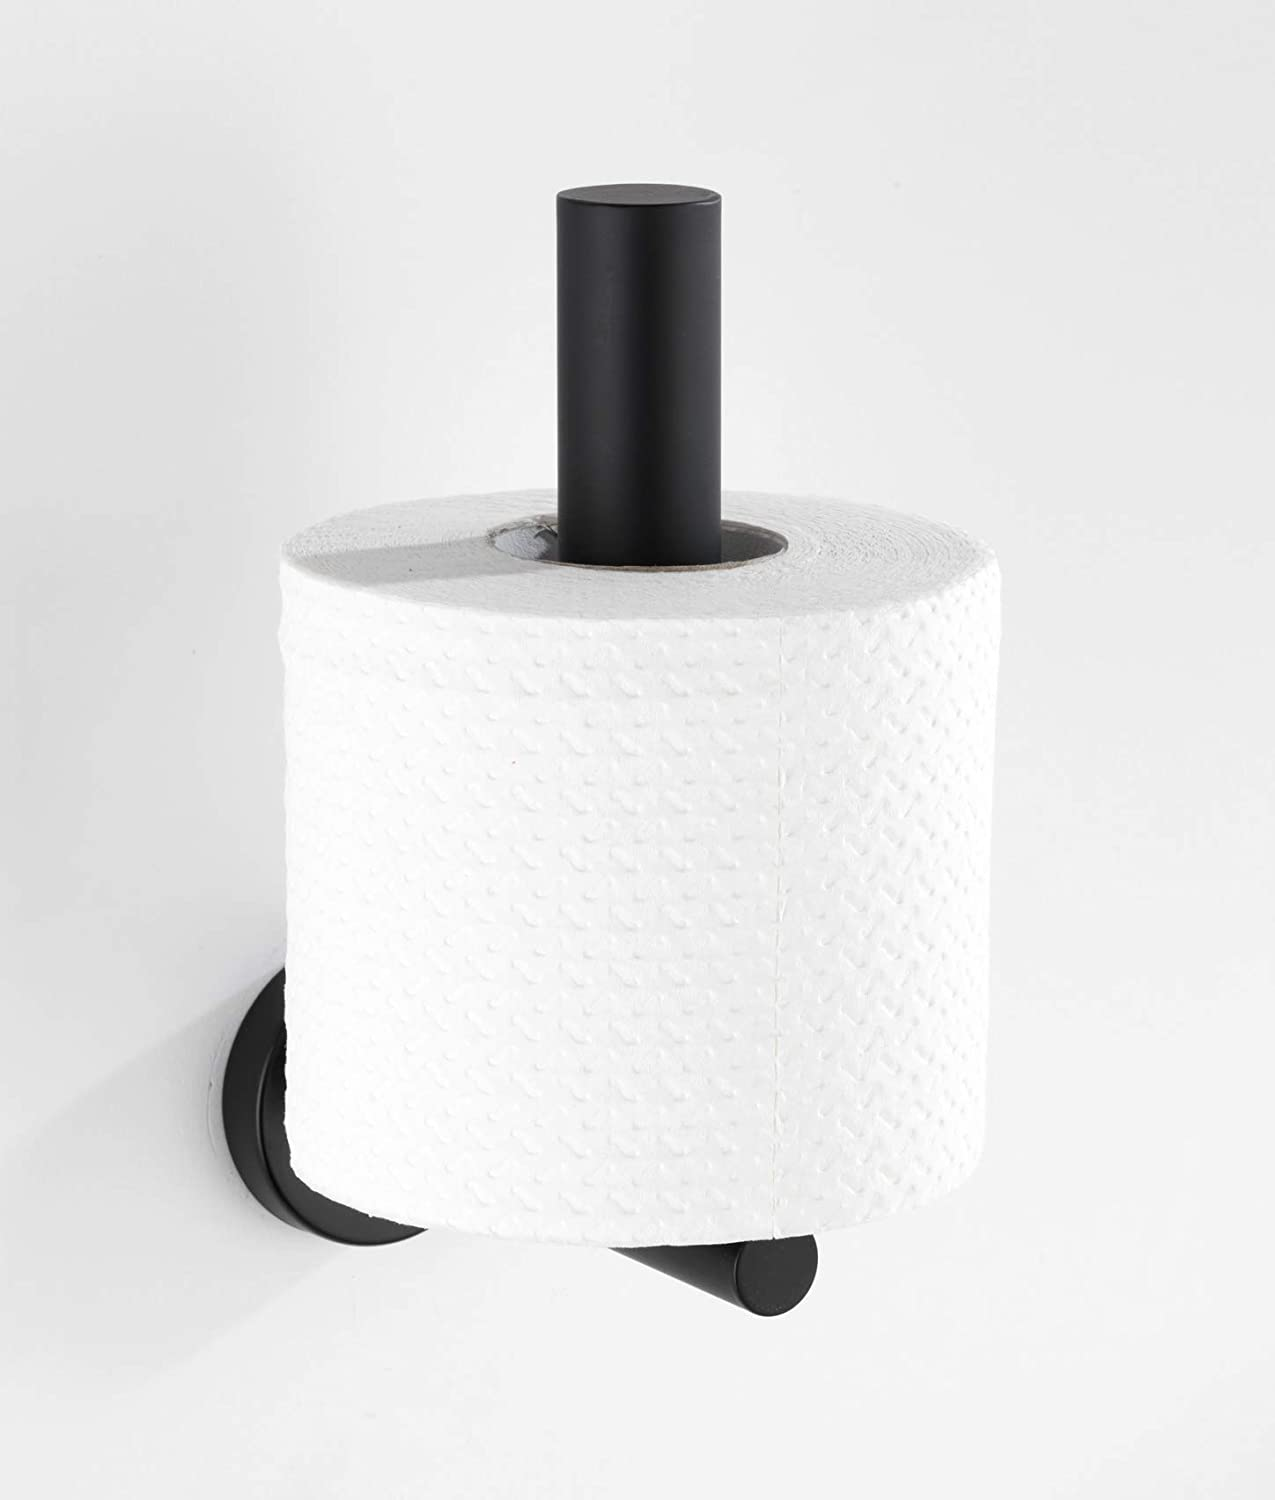 Toilettenpapier-Ersatzrollenhalter Bosio Black matt Edelstahl - WC-Rollenhalter, Edelstahl rostfrei, 8 x 18 x 12.5 cm, Matt